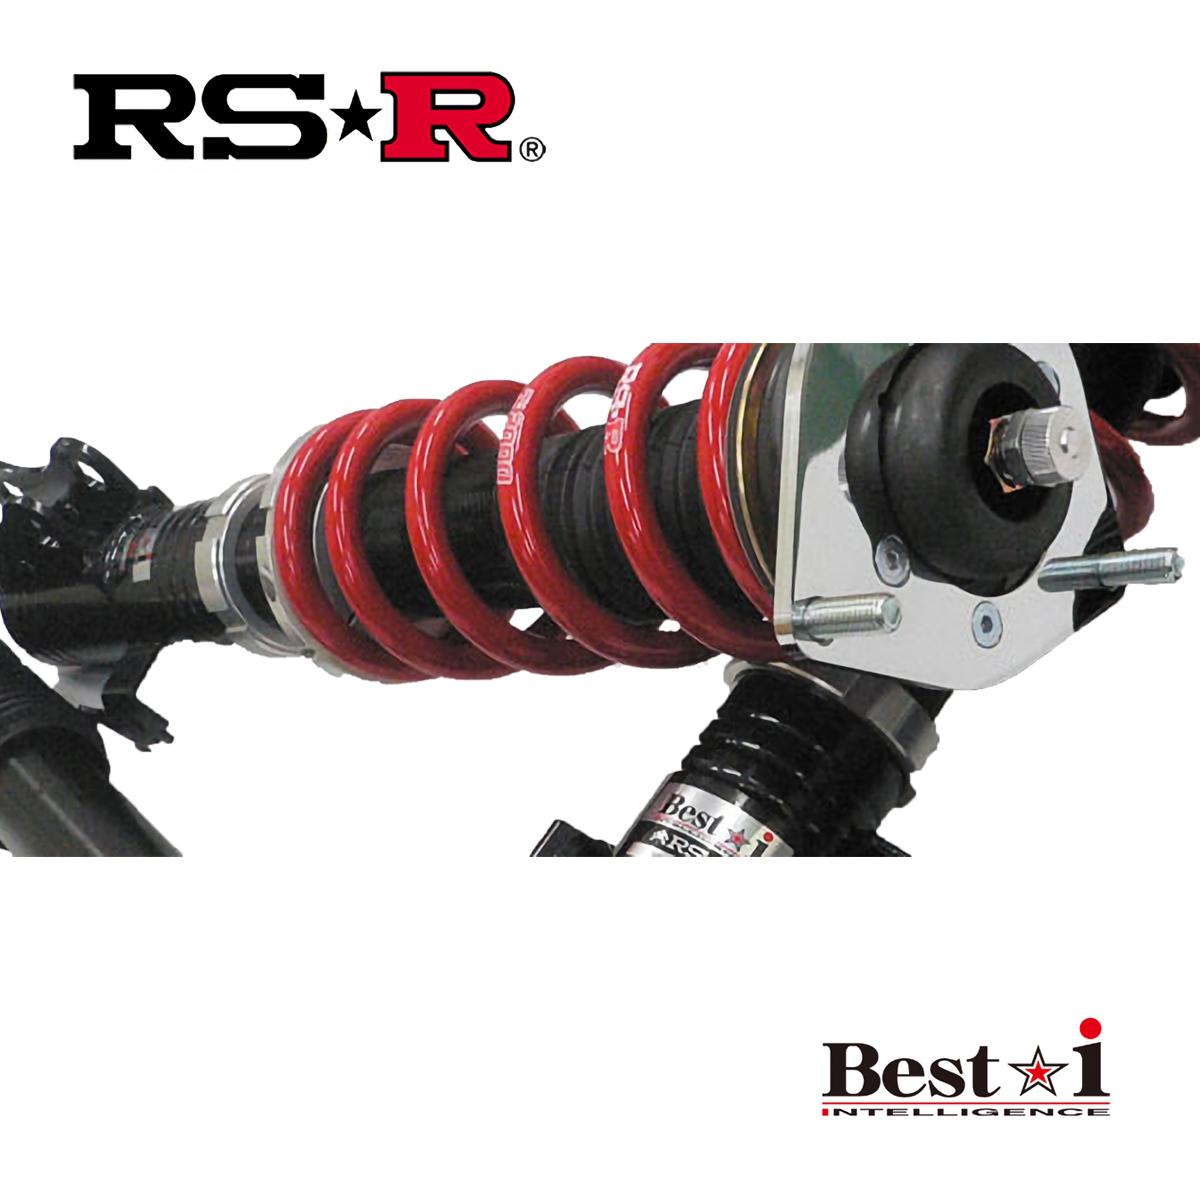 RSR レガシィB4 BN9 車高調 リア車高調整:全長式 BIF018M RS-R Best-i ベストi